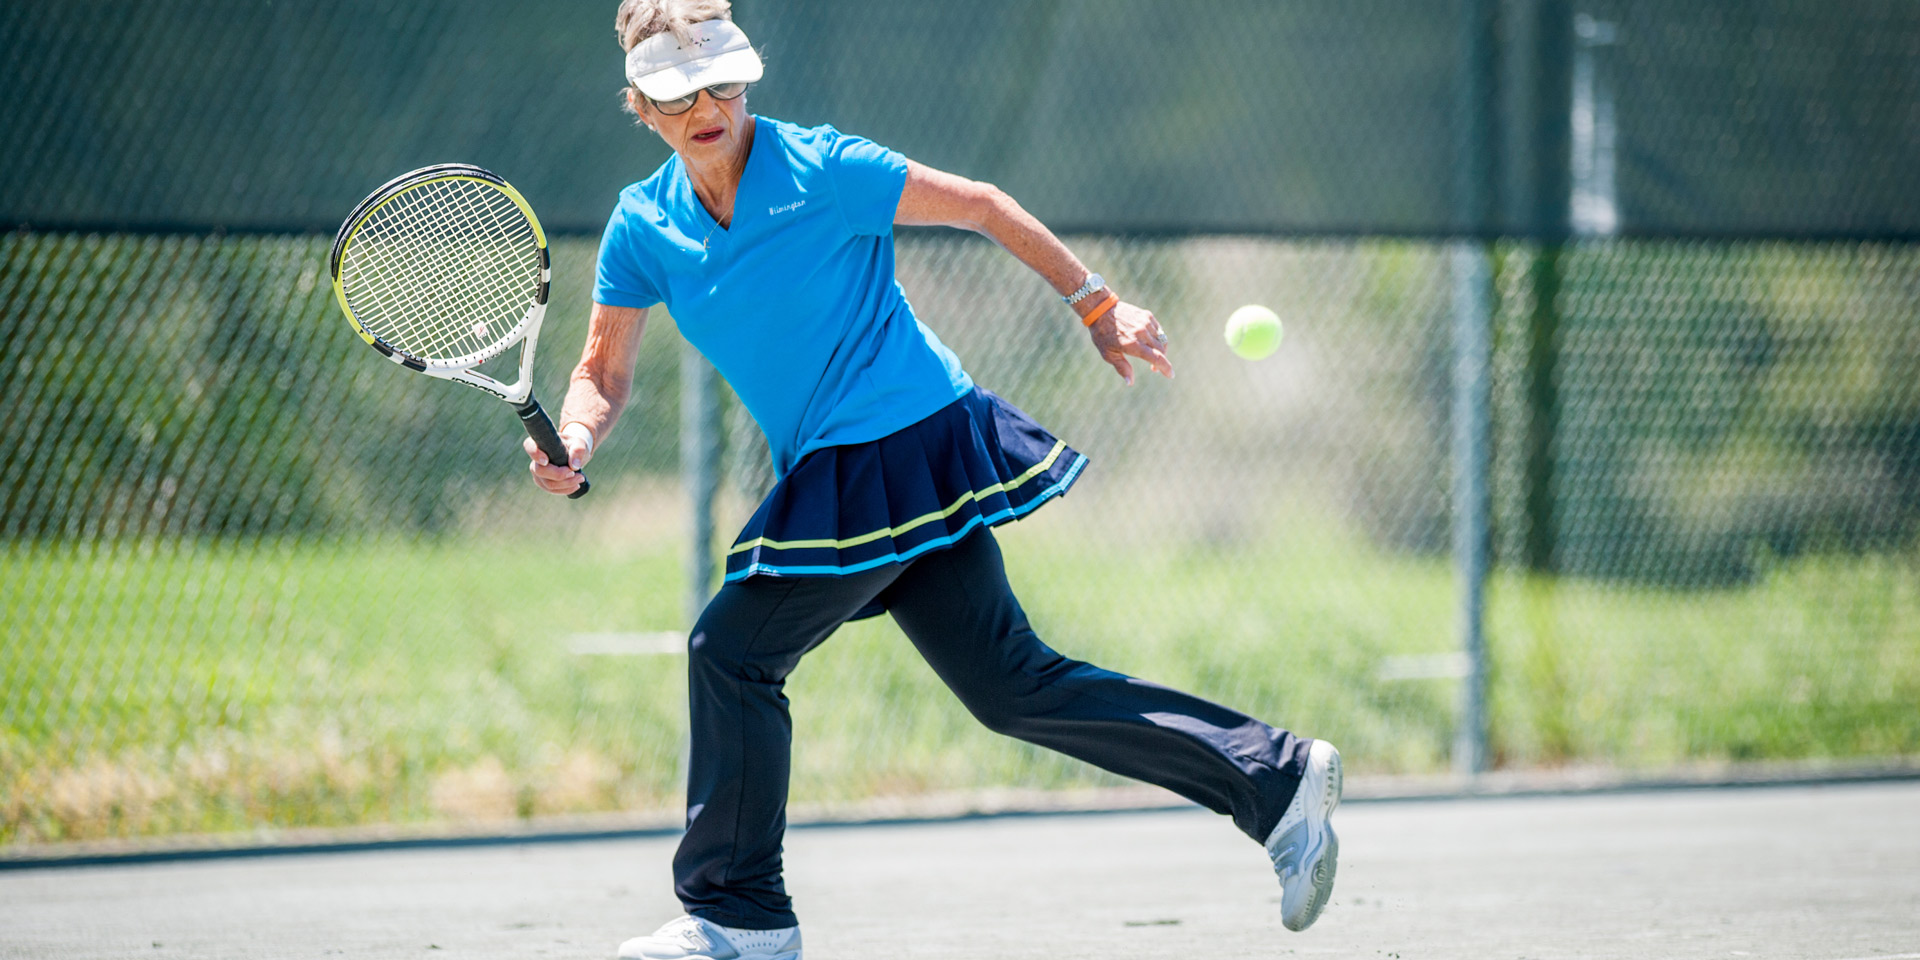 An older person runs for a tennis ball while playing tennis